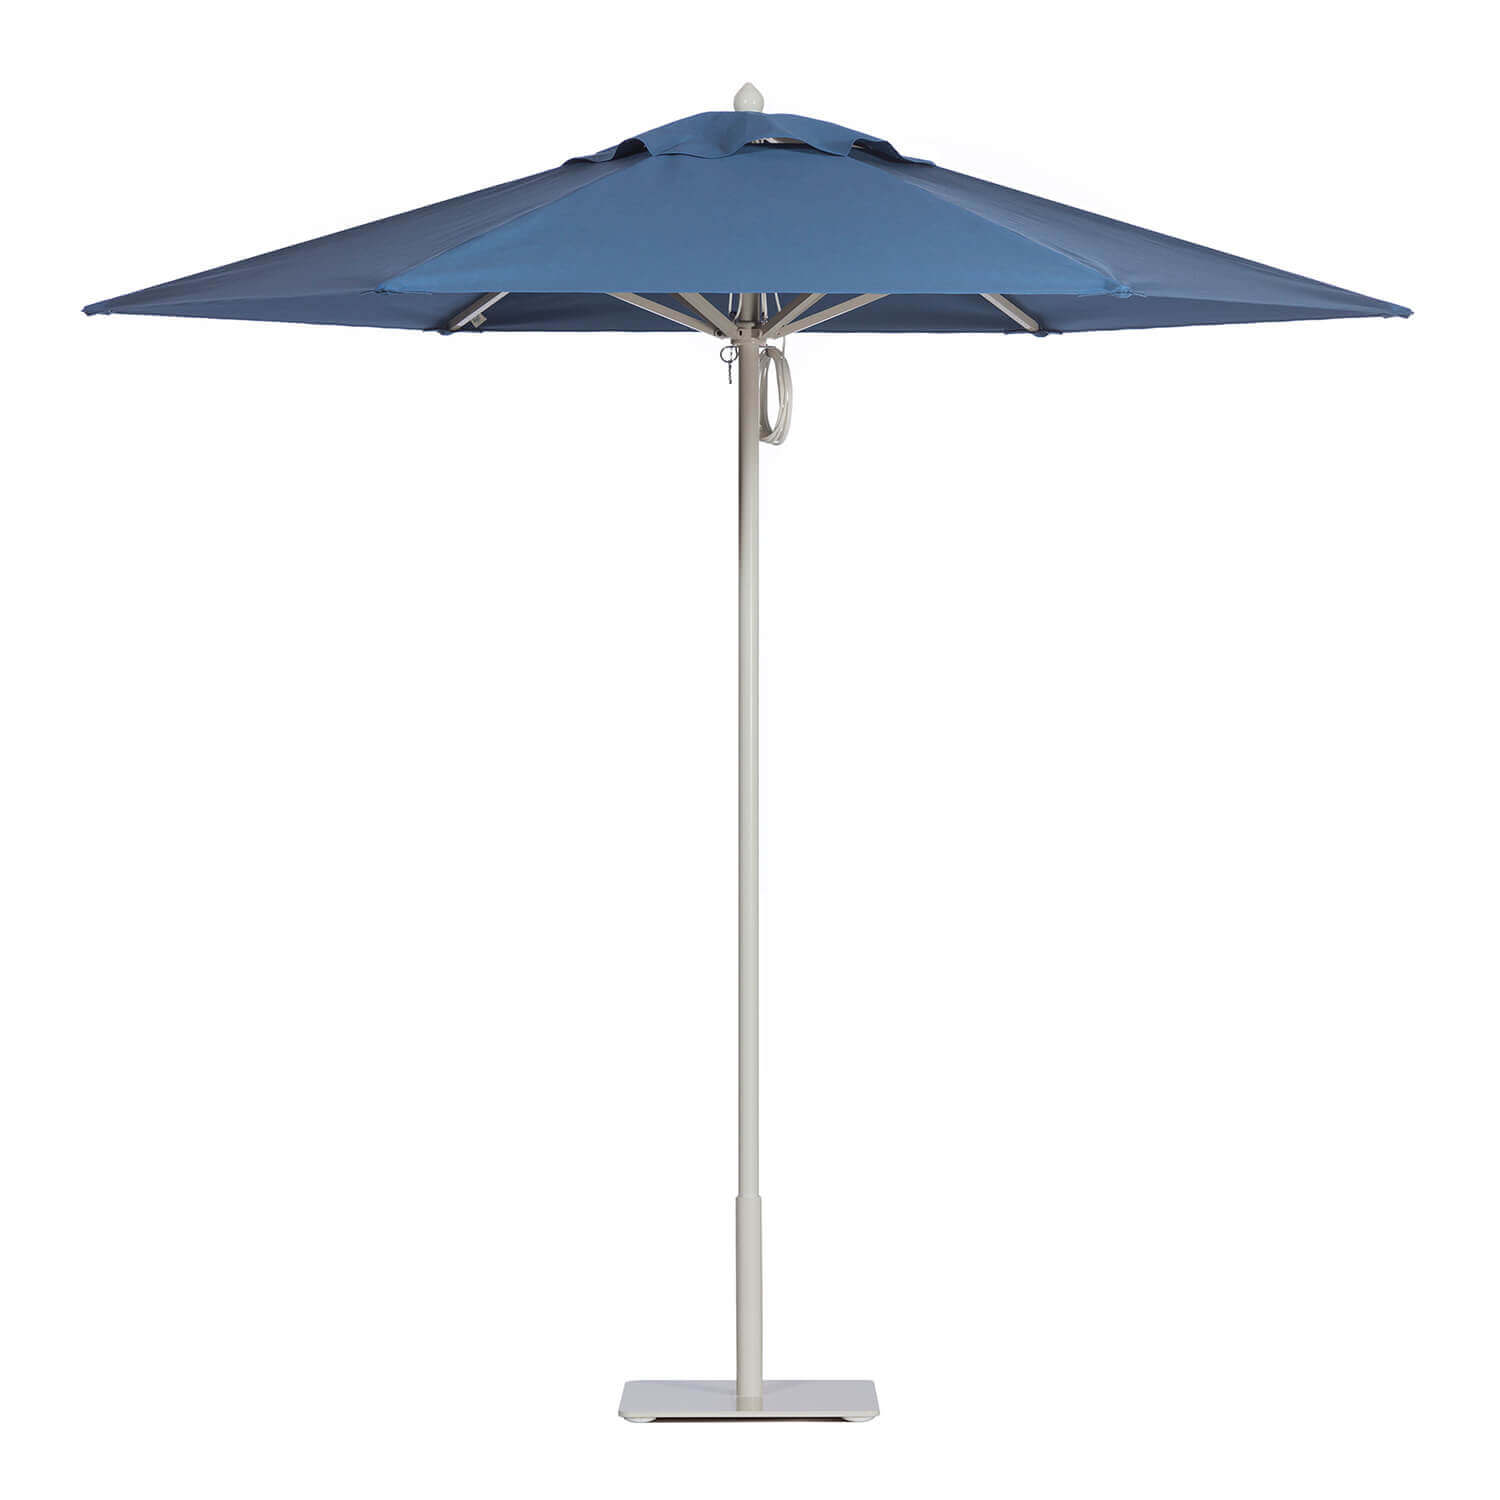 Slate Blue Umbrella Image